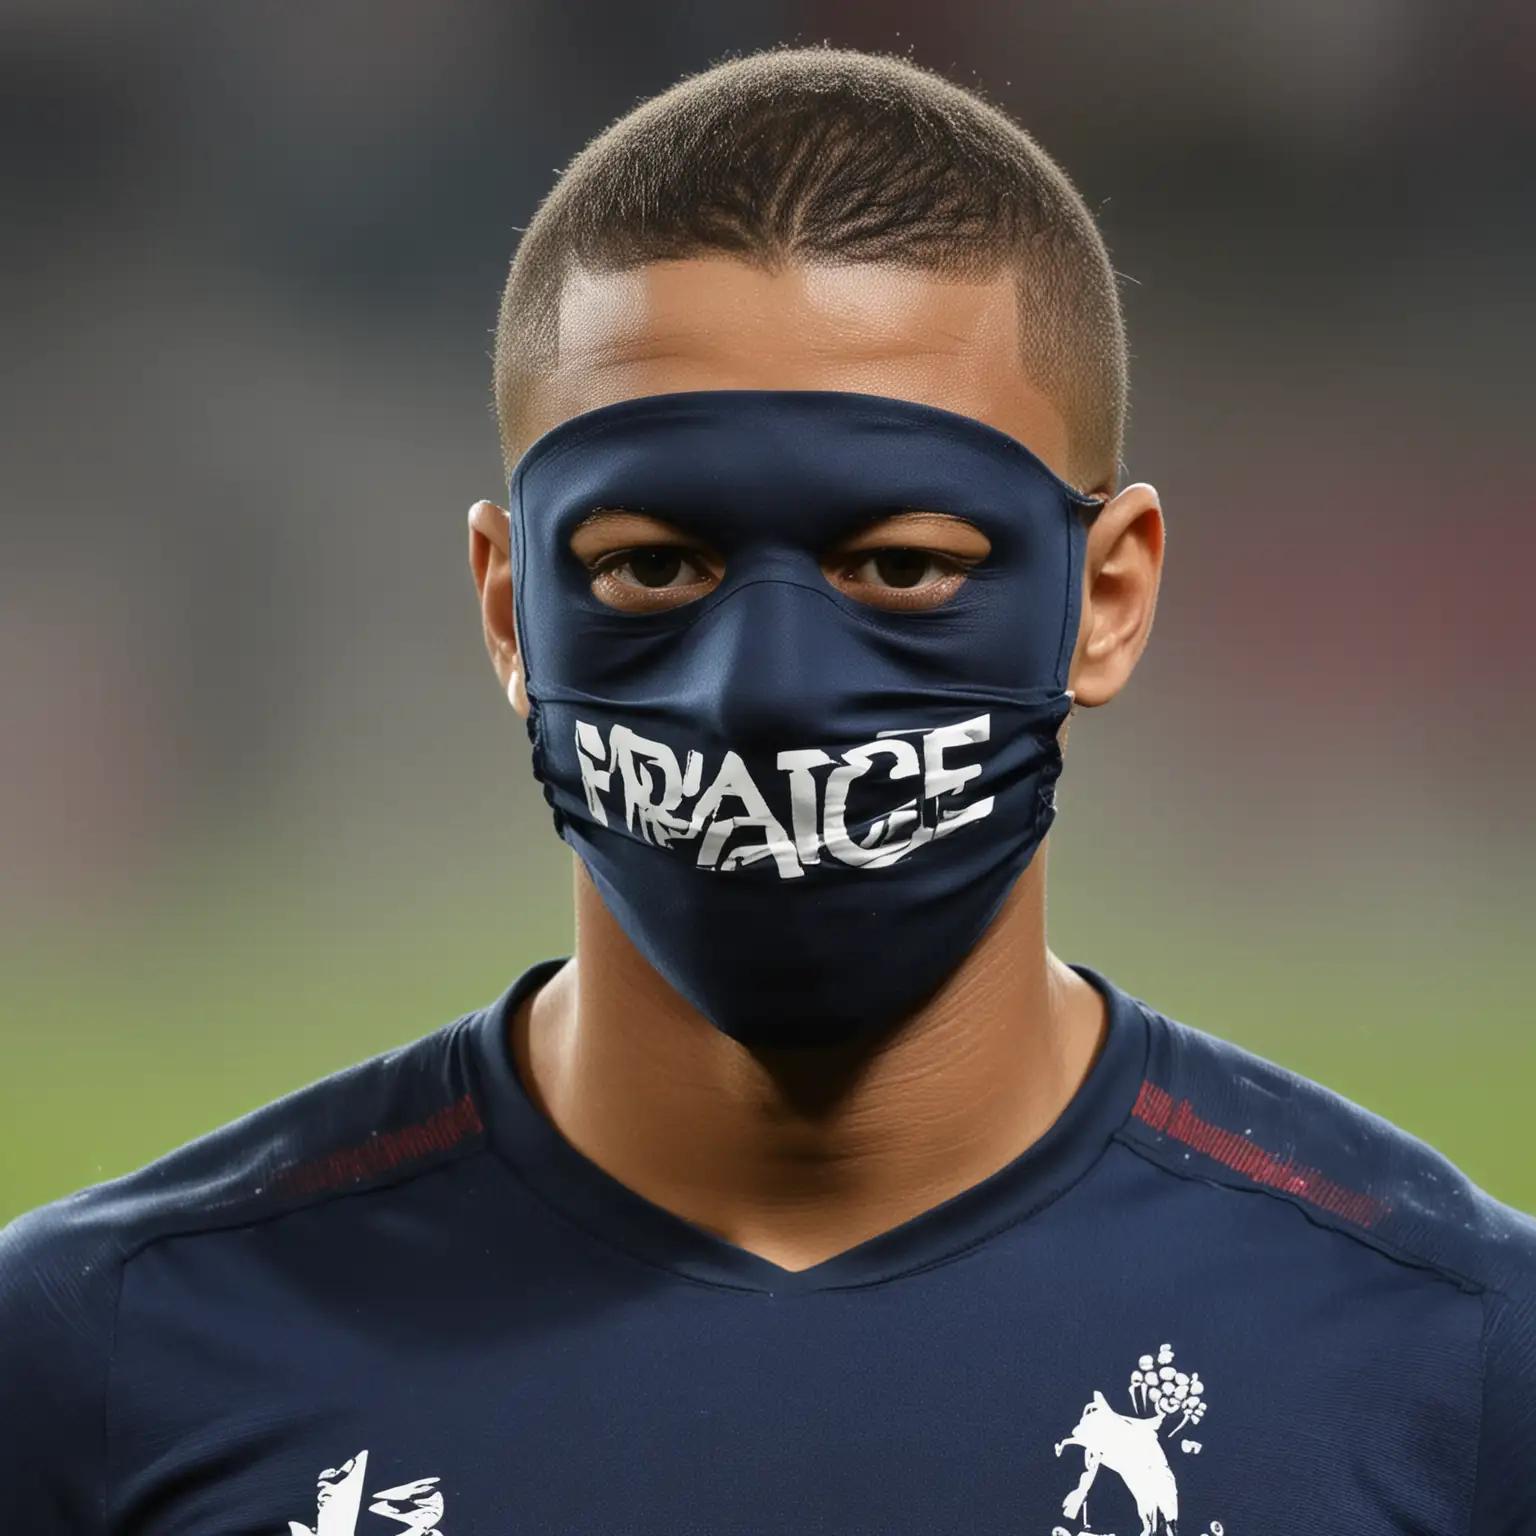 France-Team-Mbappe-Wearing-a-Mask